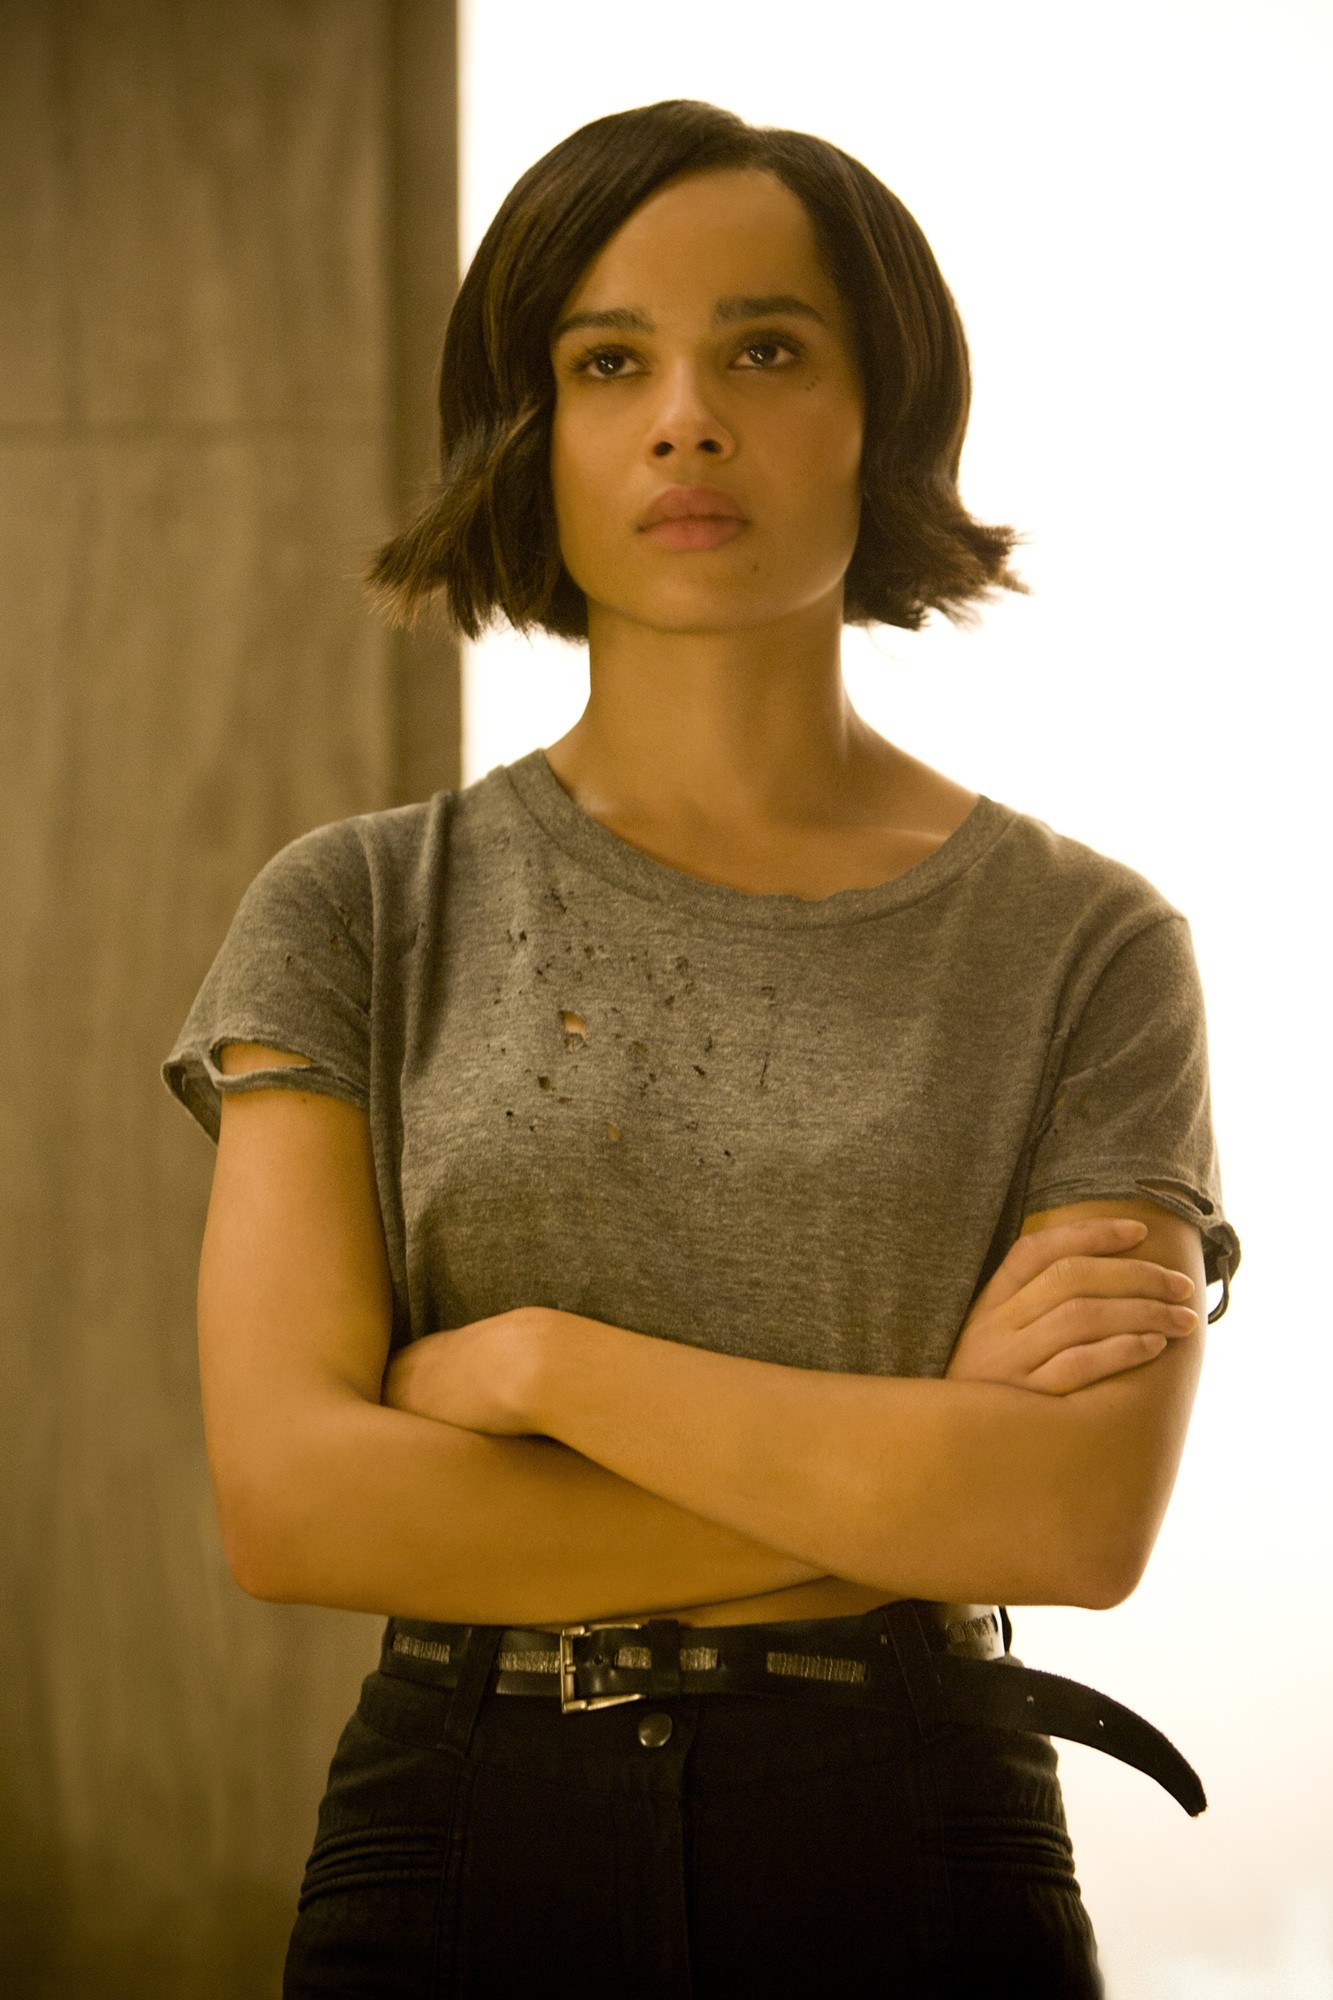 Zoe Kravitz stars as Christina in Summit Entertainment's The Divergent Series: Insurgent (2015)